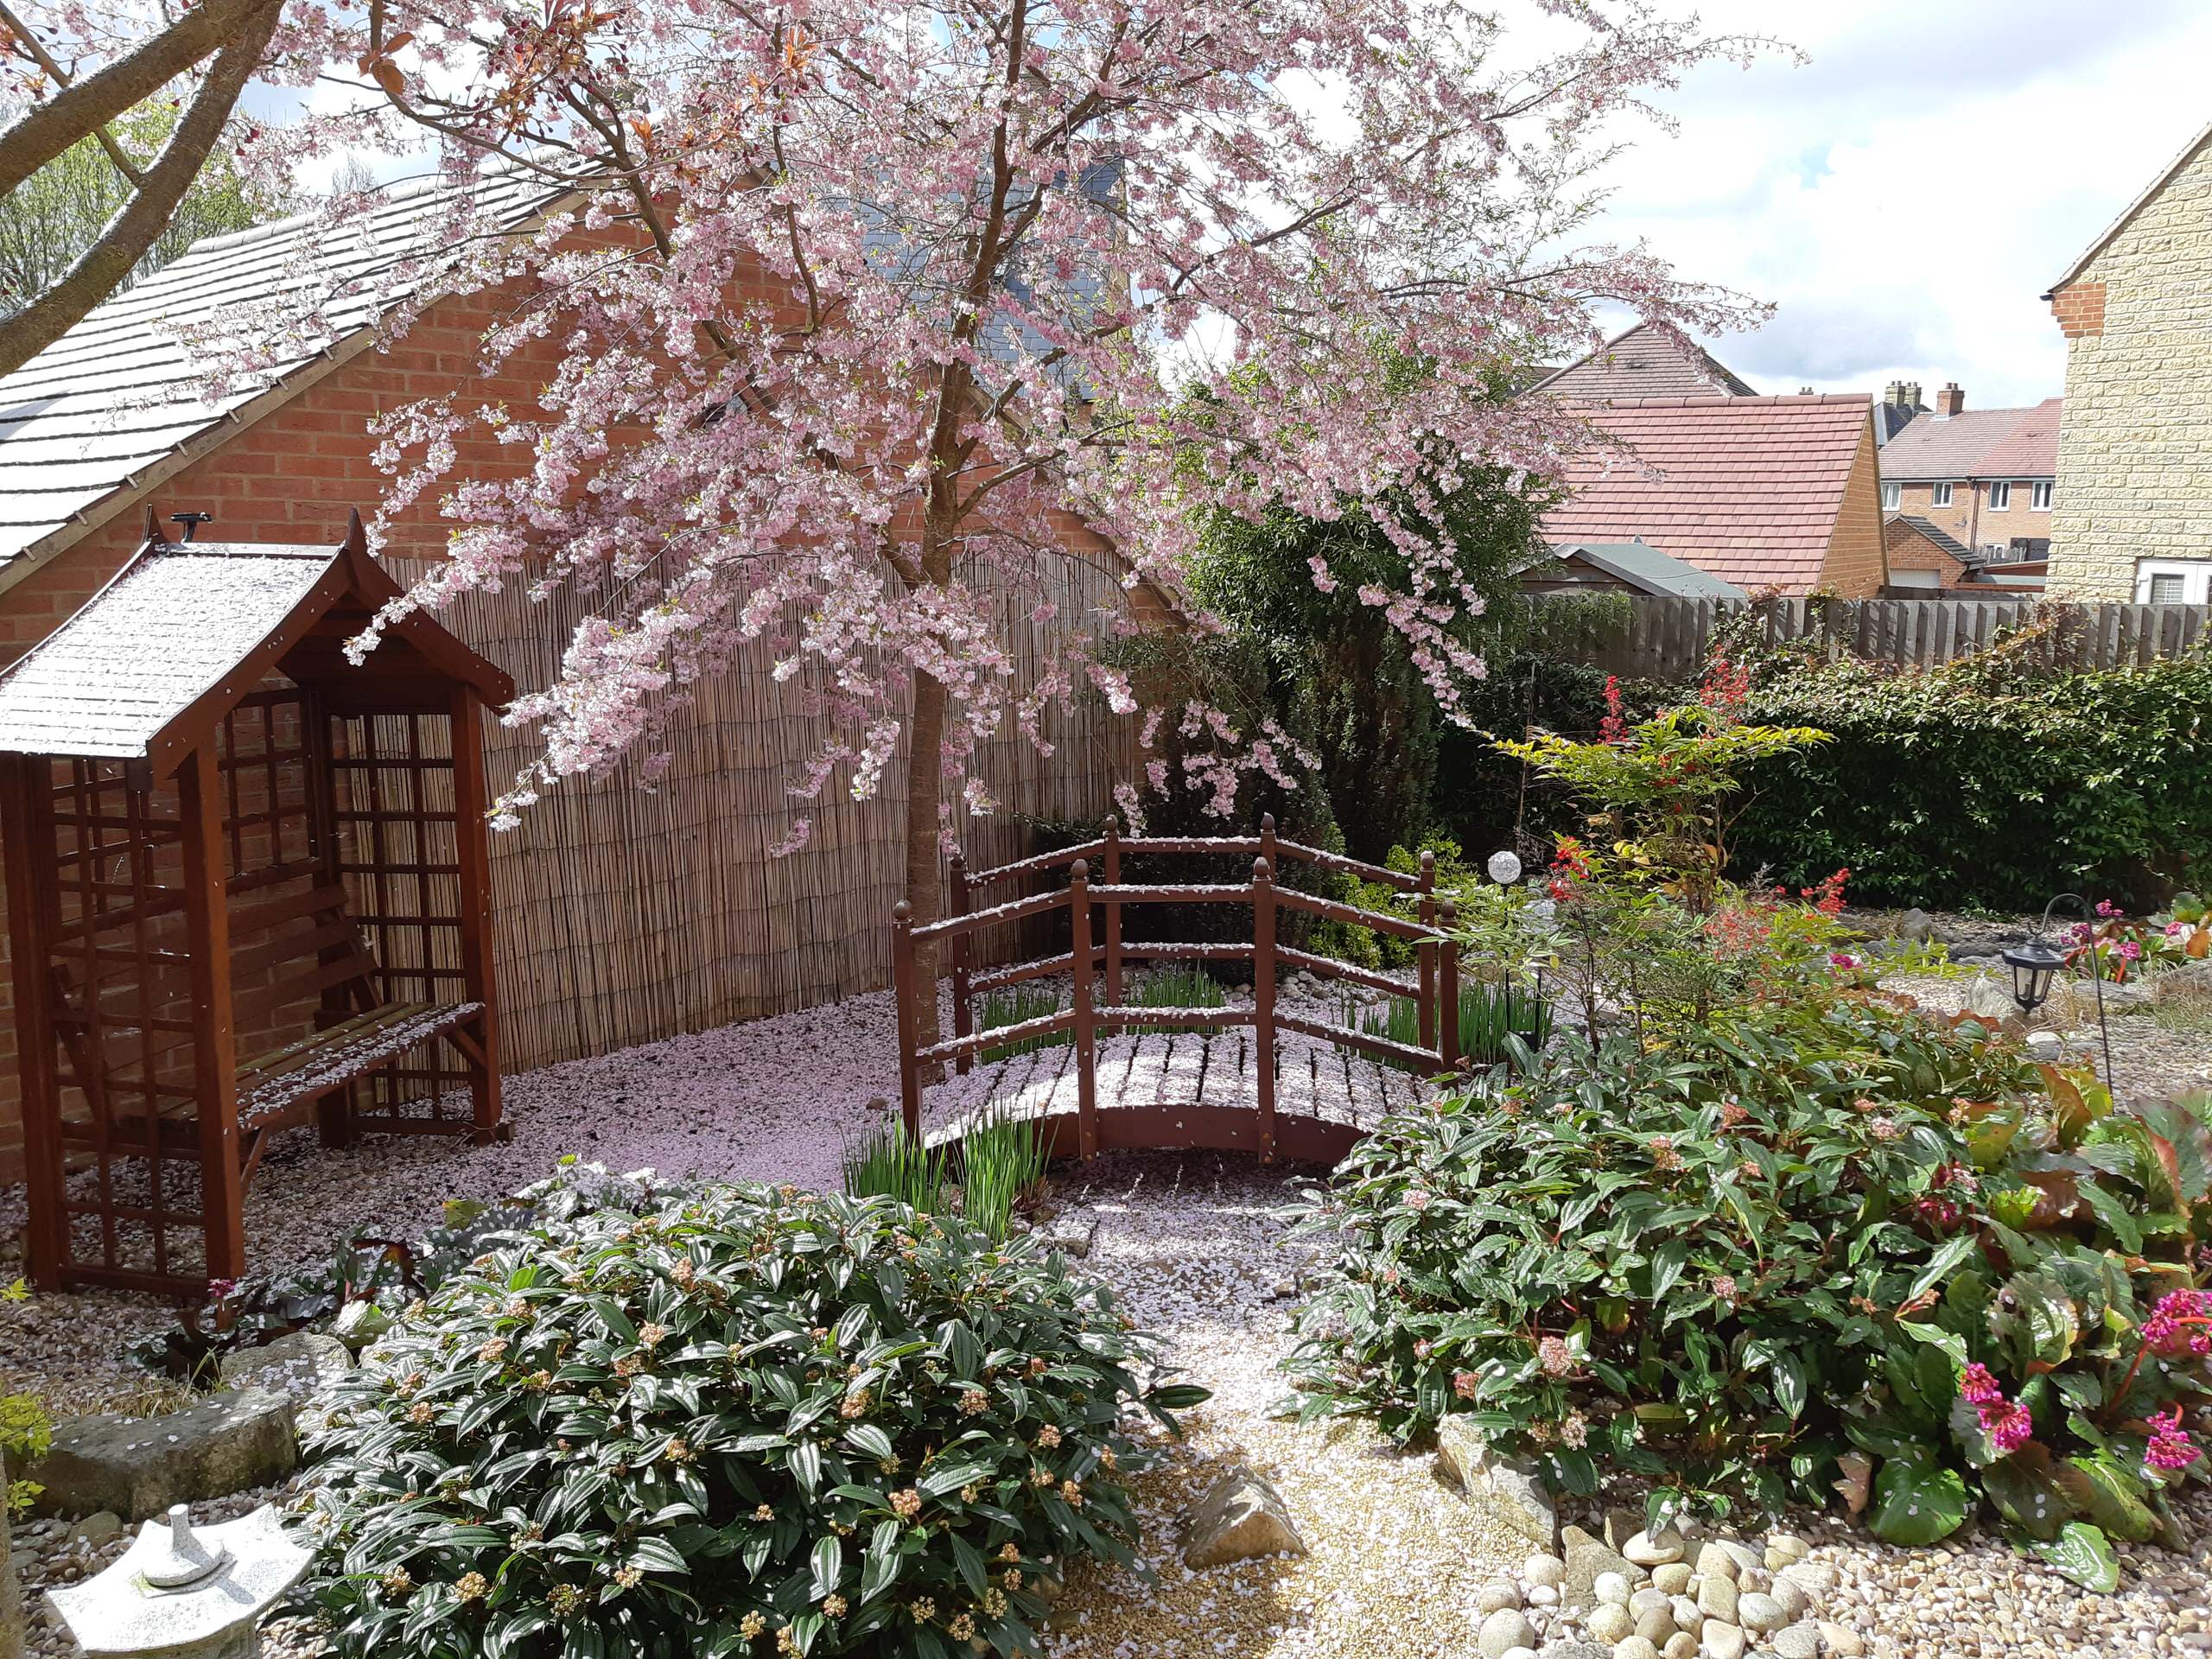 Japanese style garden